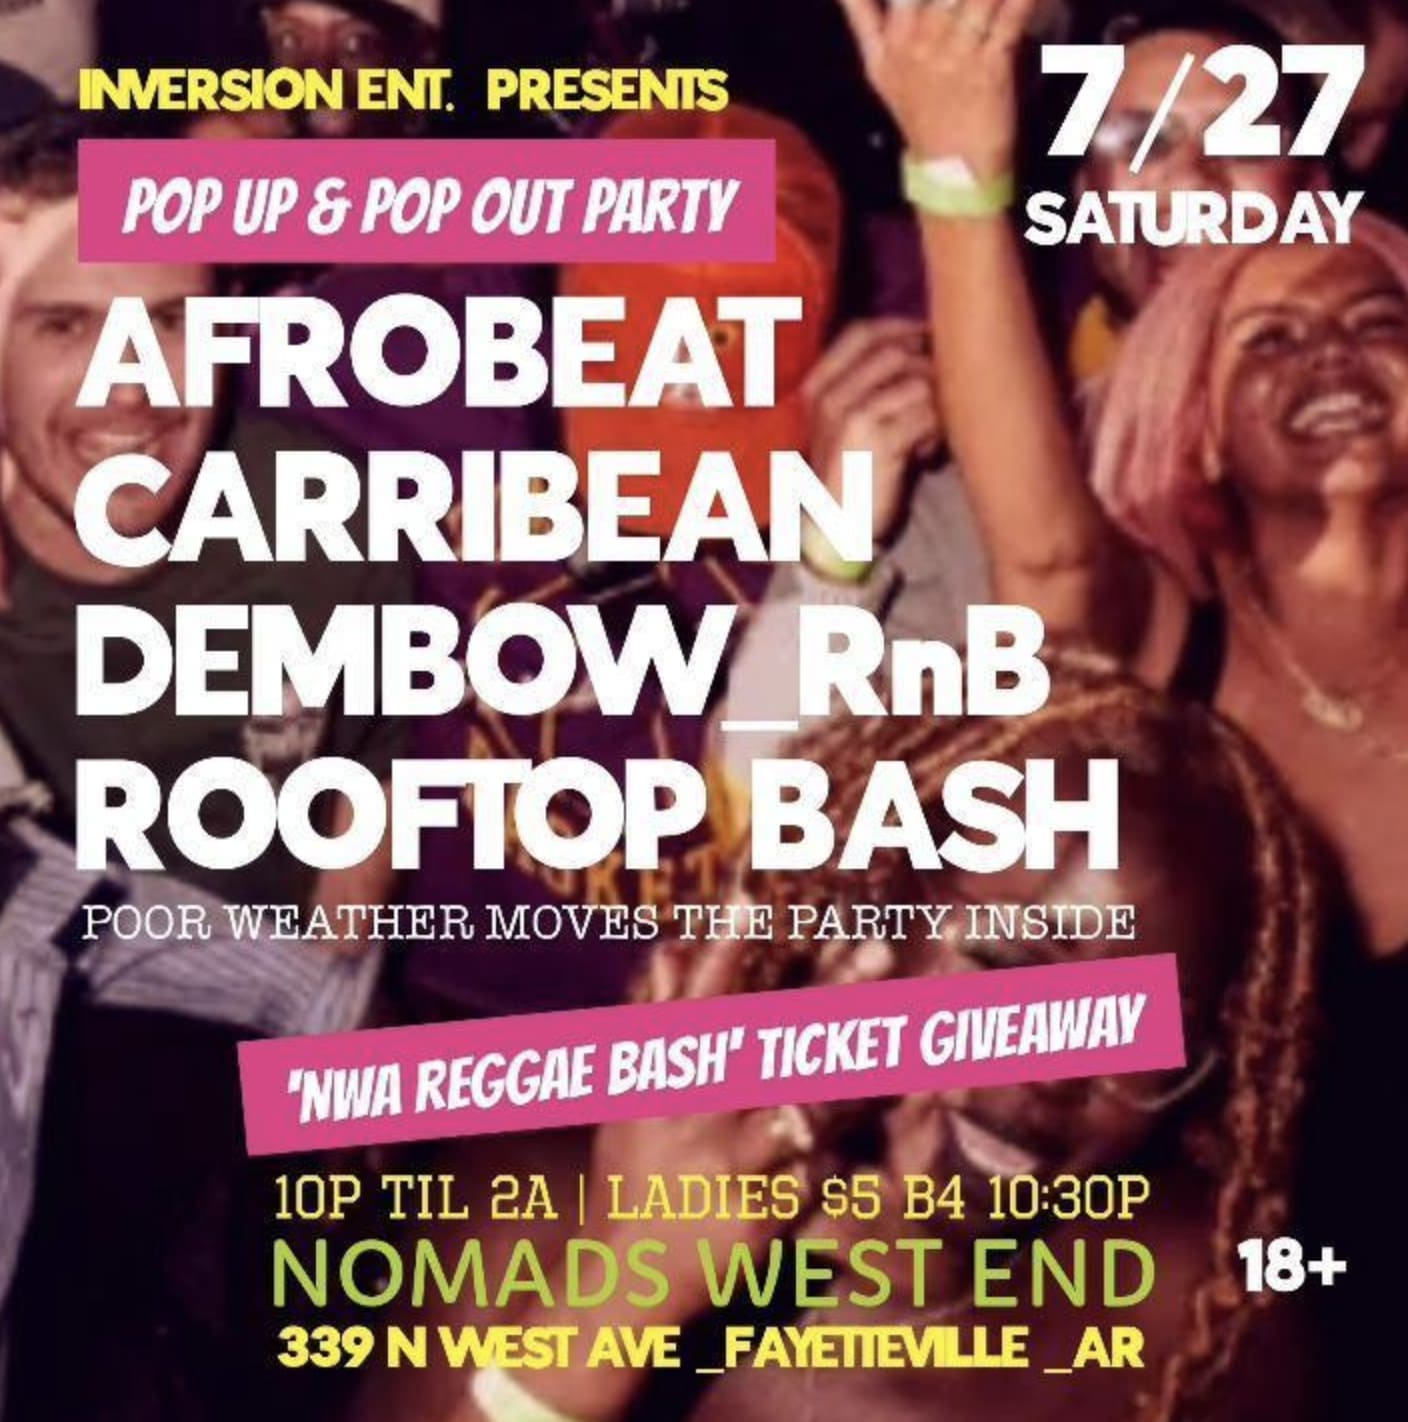 Afrobeat Caribbean Rooftop Bash image